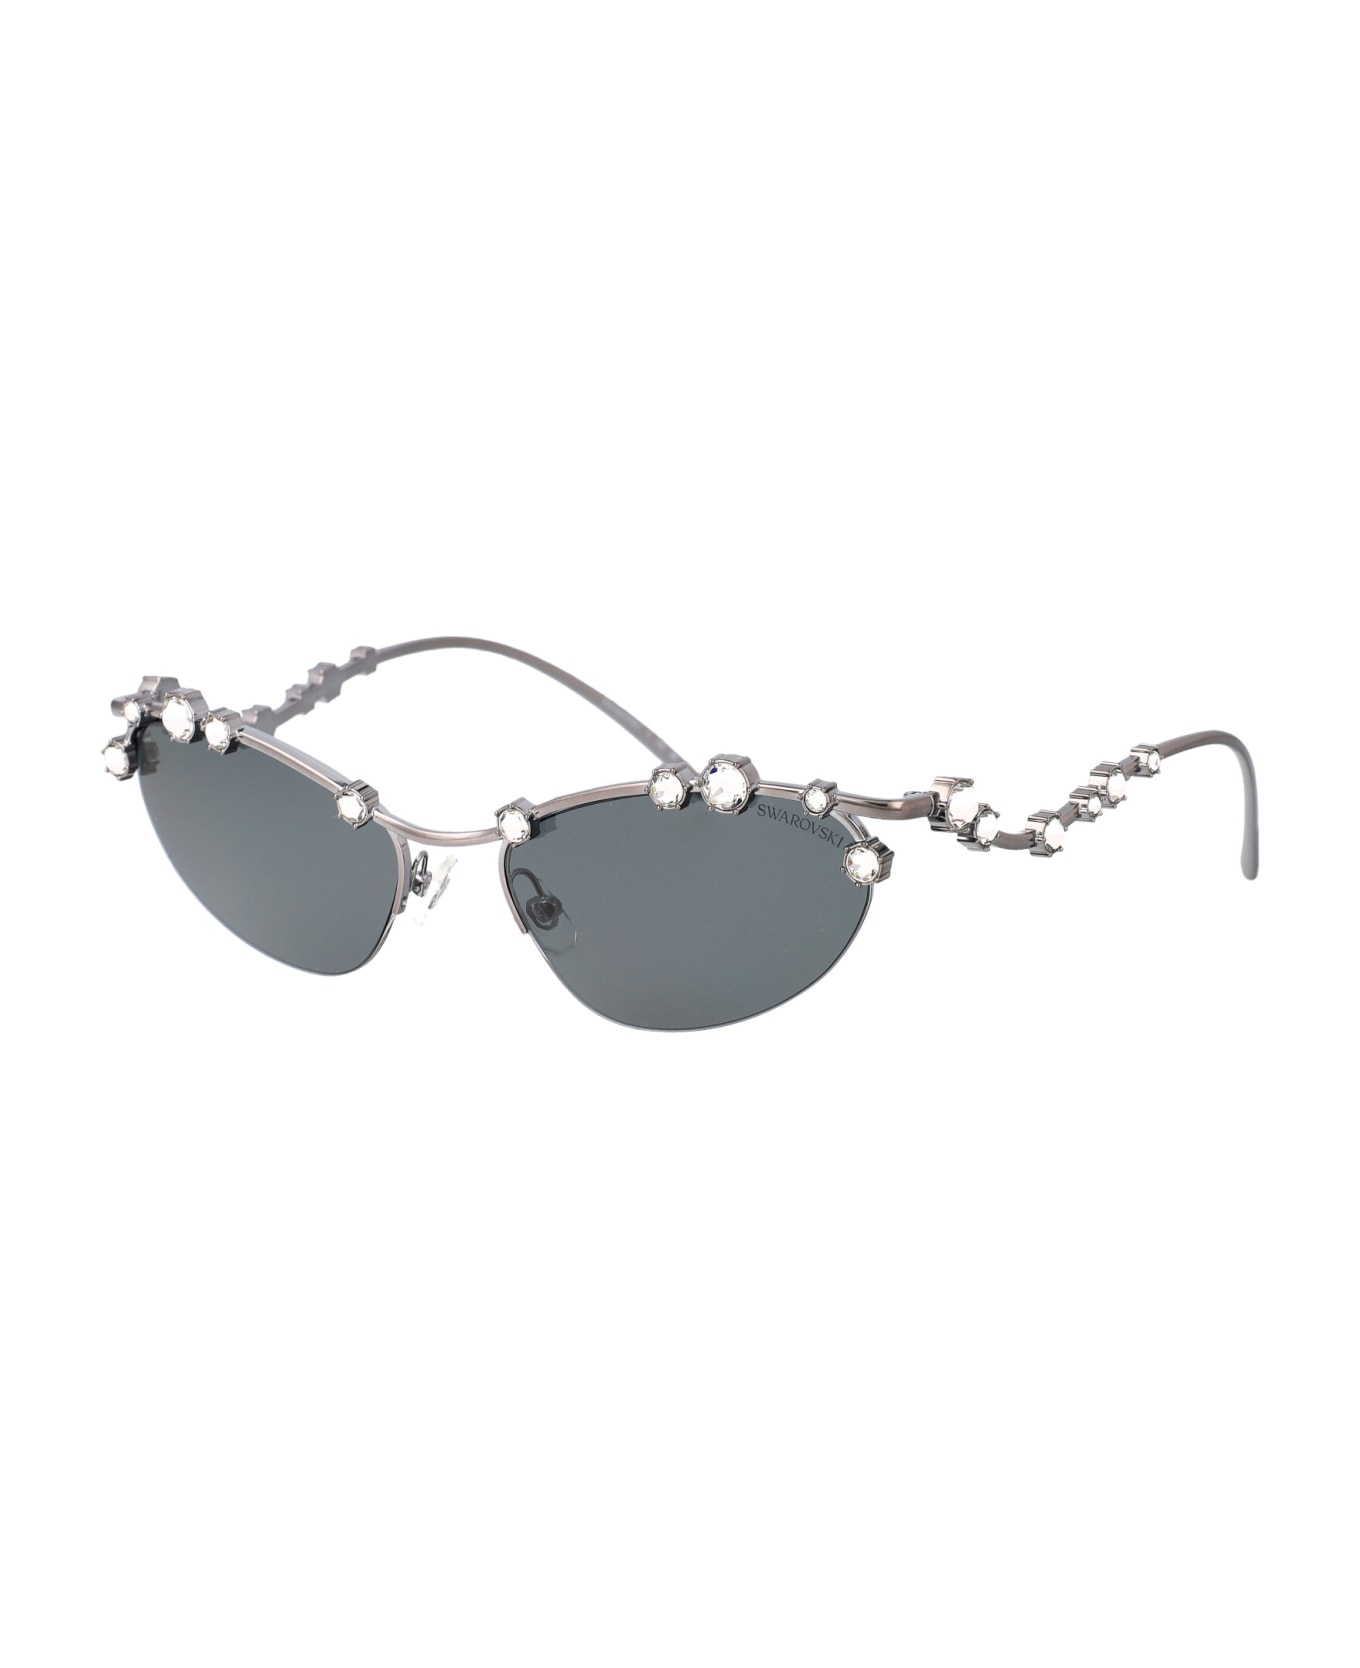 Swarovski 0sk7016 Sunglasses - 400987 Gunmetal